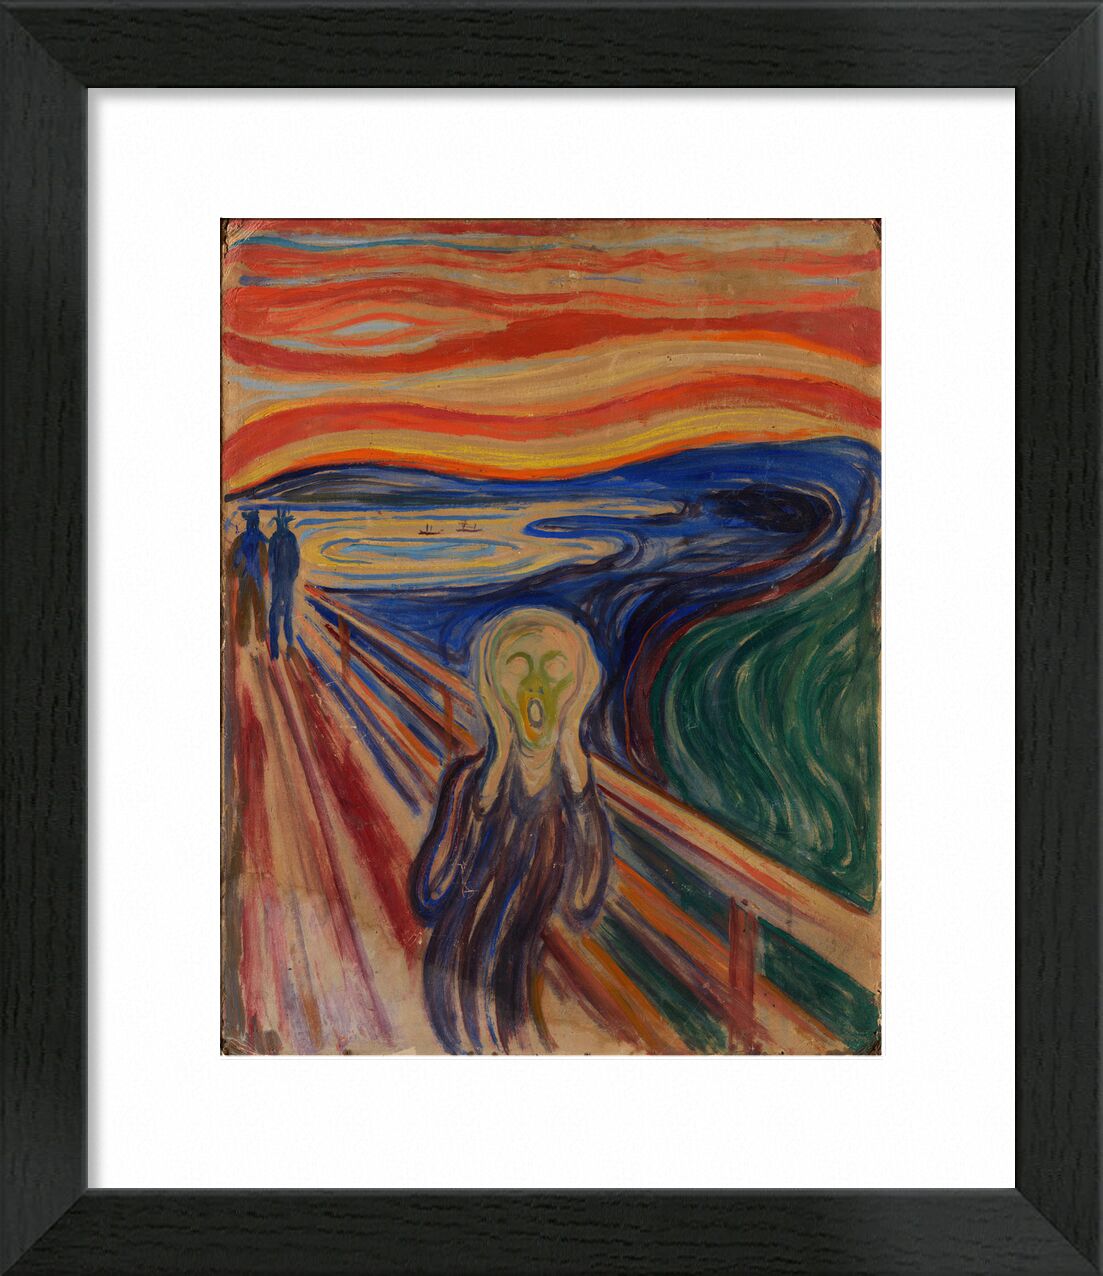 El Grito - Edvard Munch desde Bellas artes, Prodi Art, pintura, Edvard Munch, gritar, incomodidad, angustia